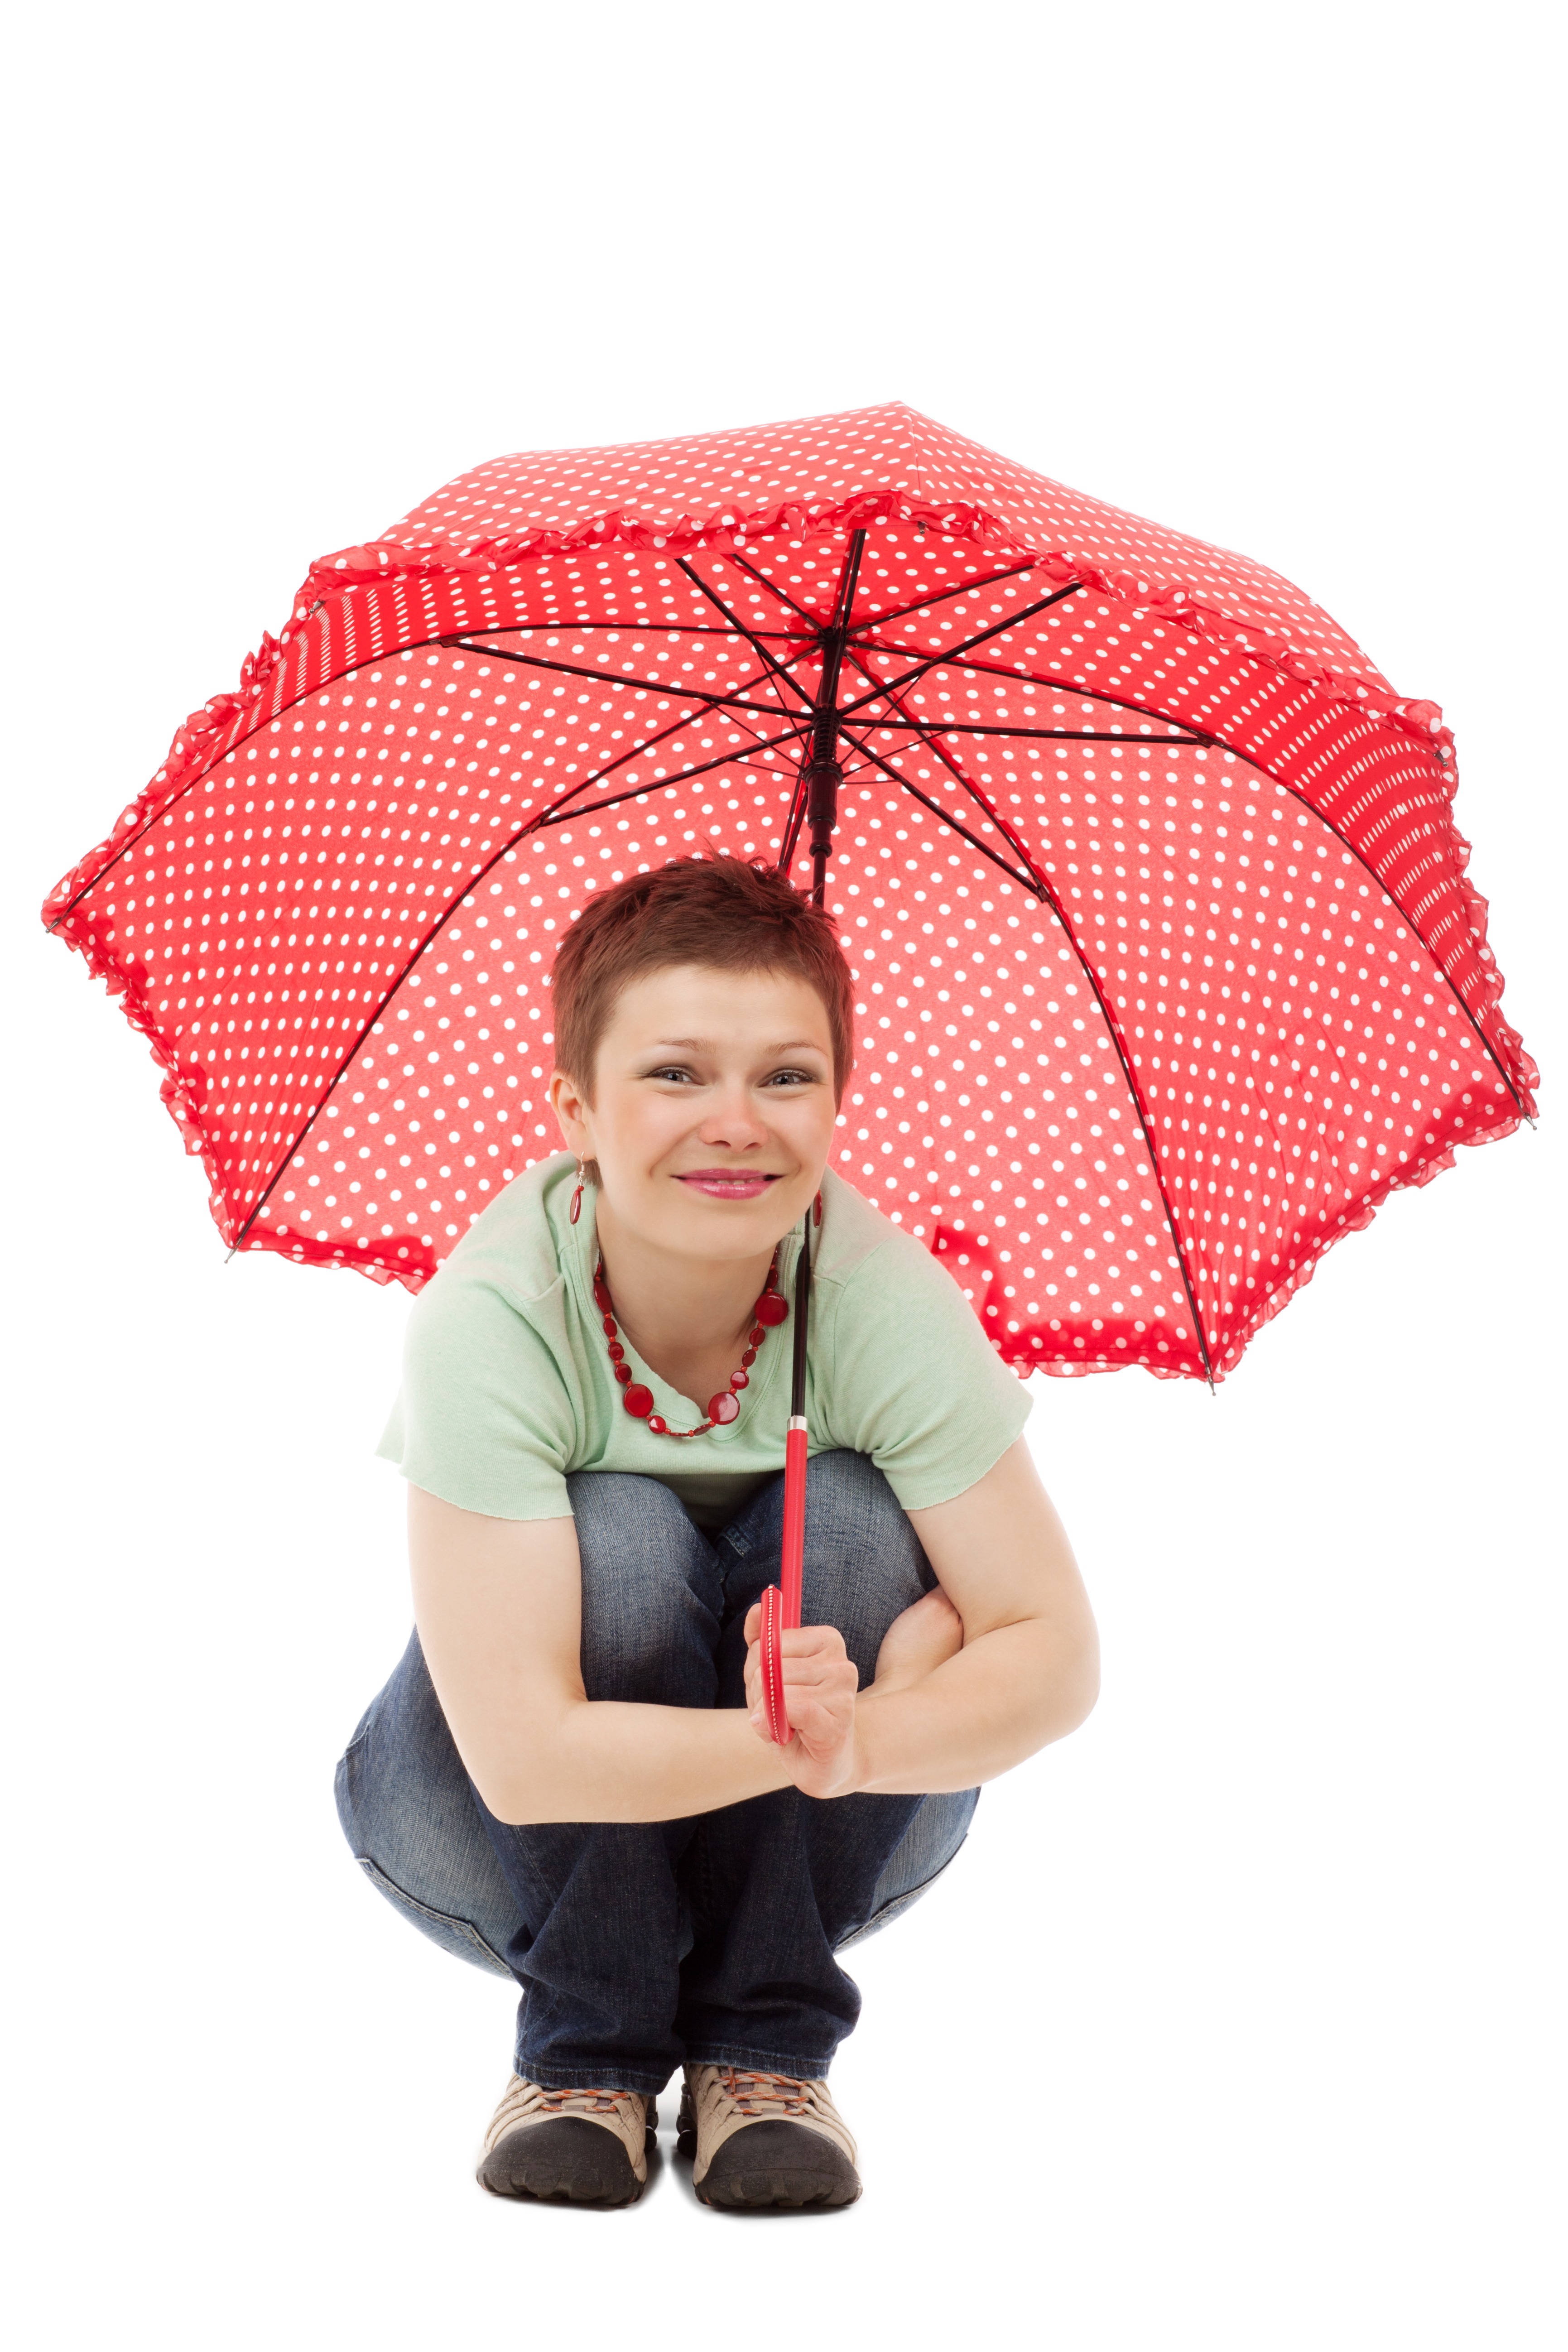 Girl squatting with umbrella photo